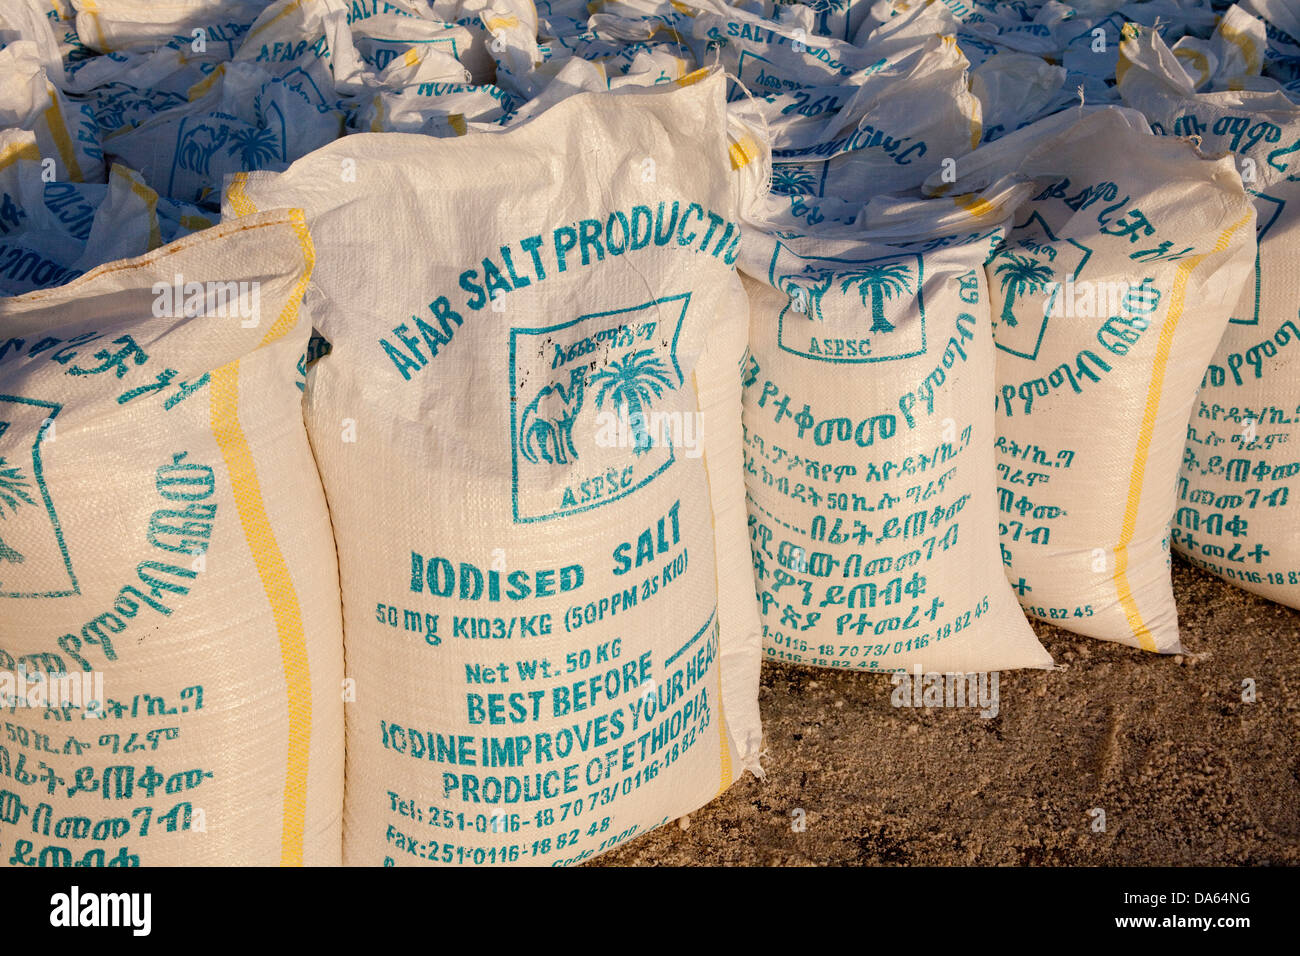 Salt production, saltwork, Afrera, lake, Africa, salt, Ethiopia, bags Stock Photo